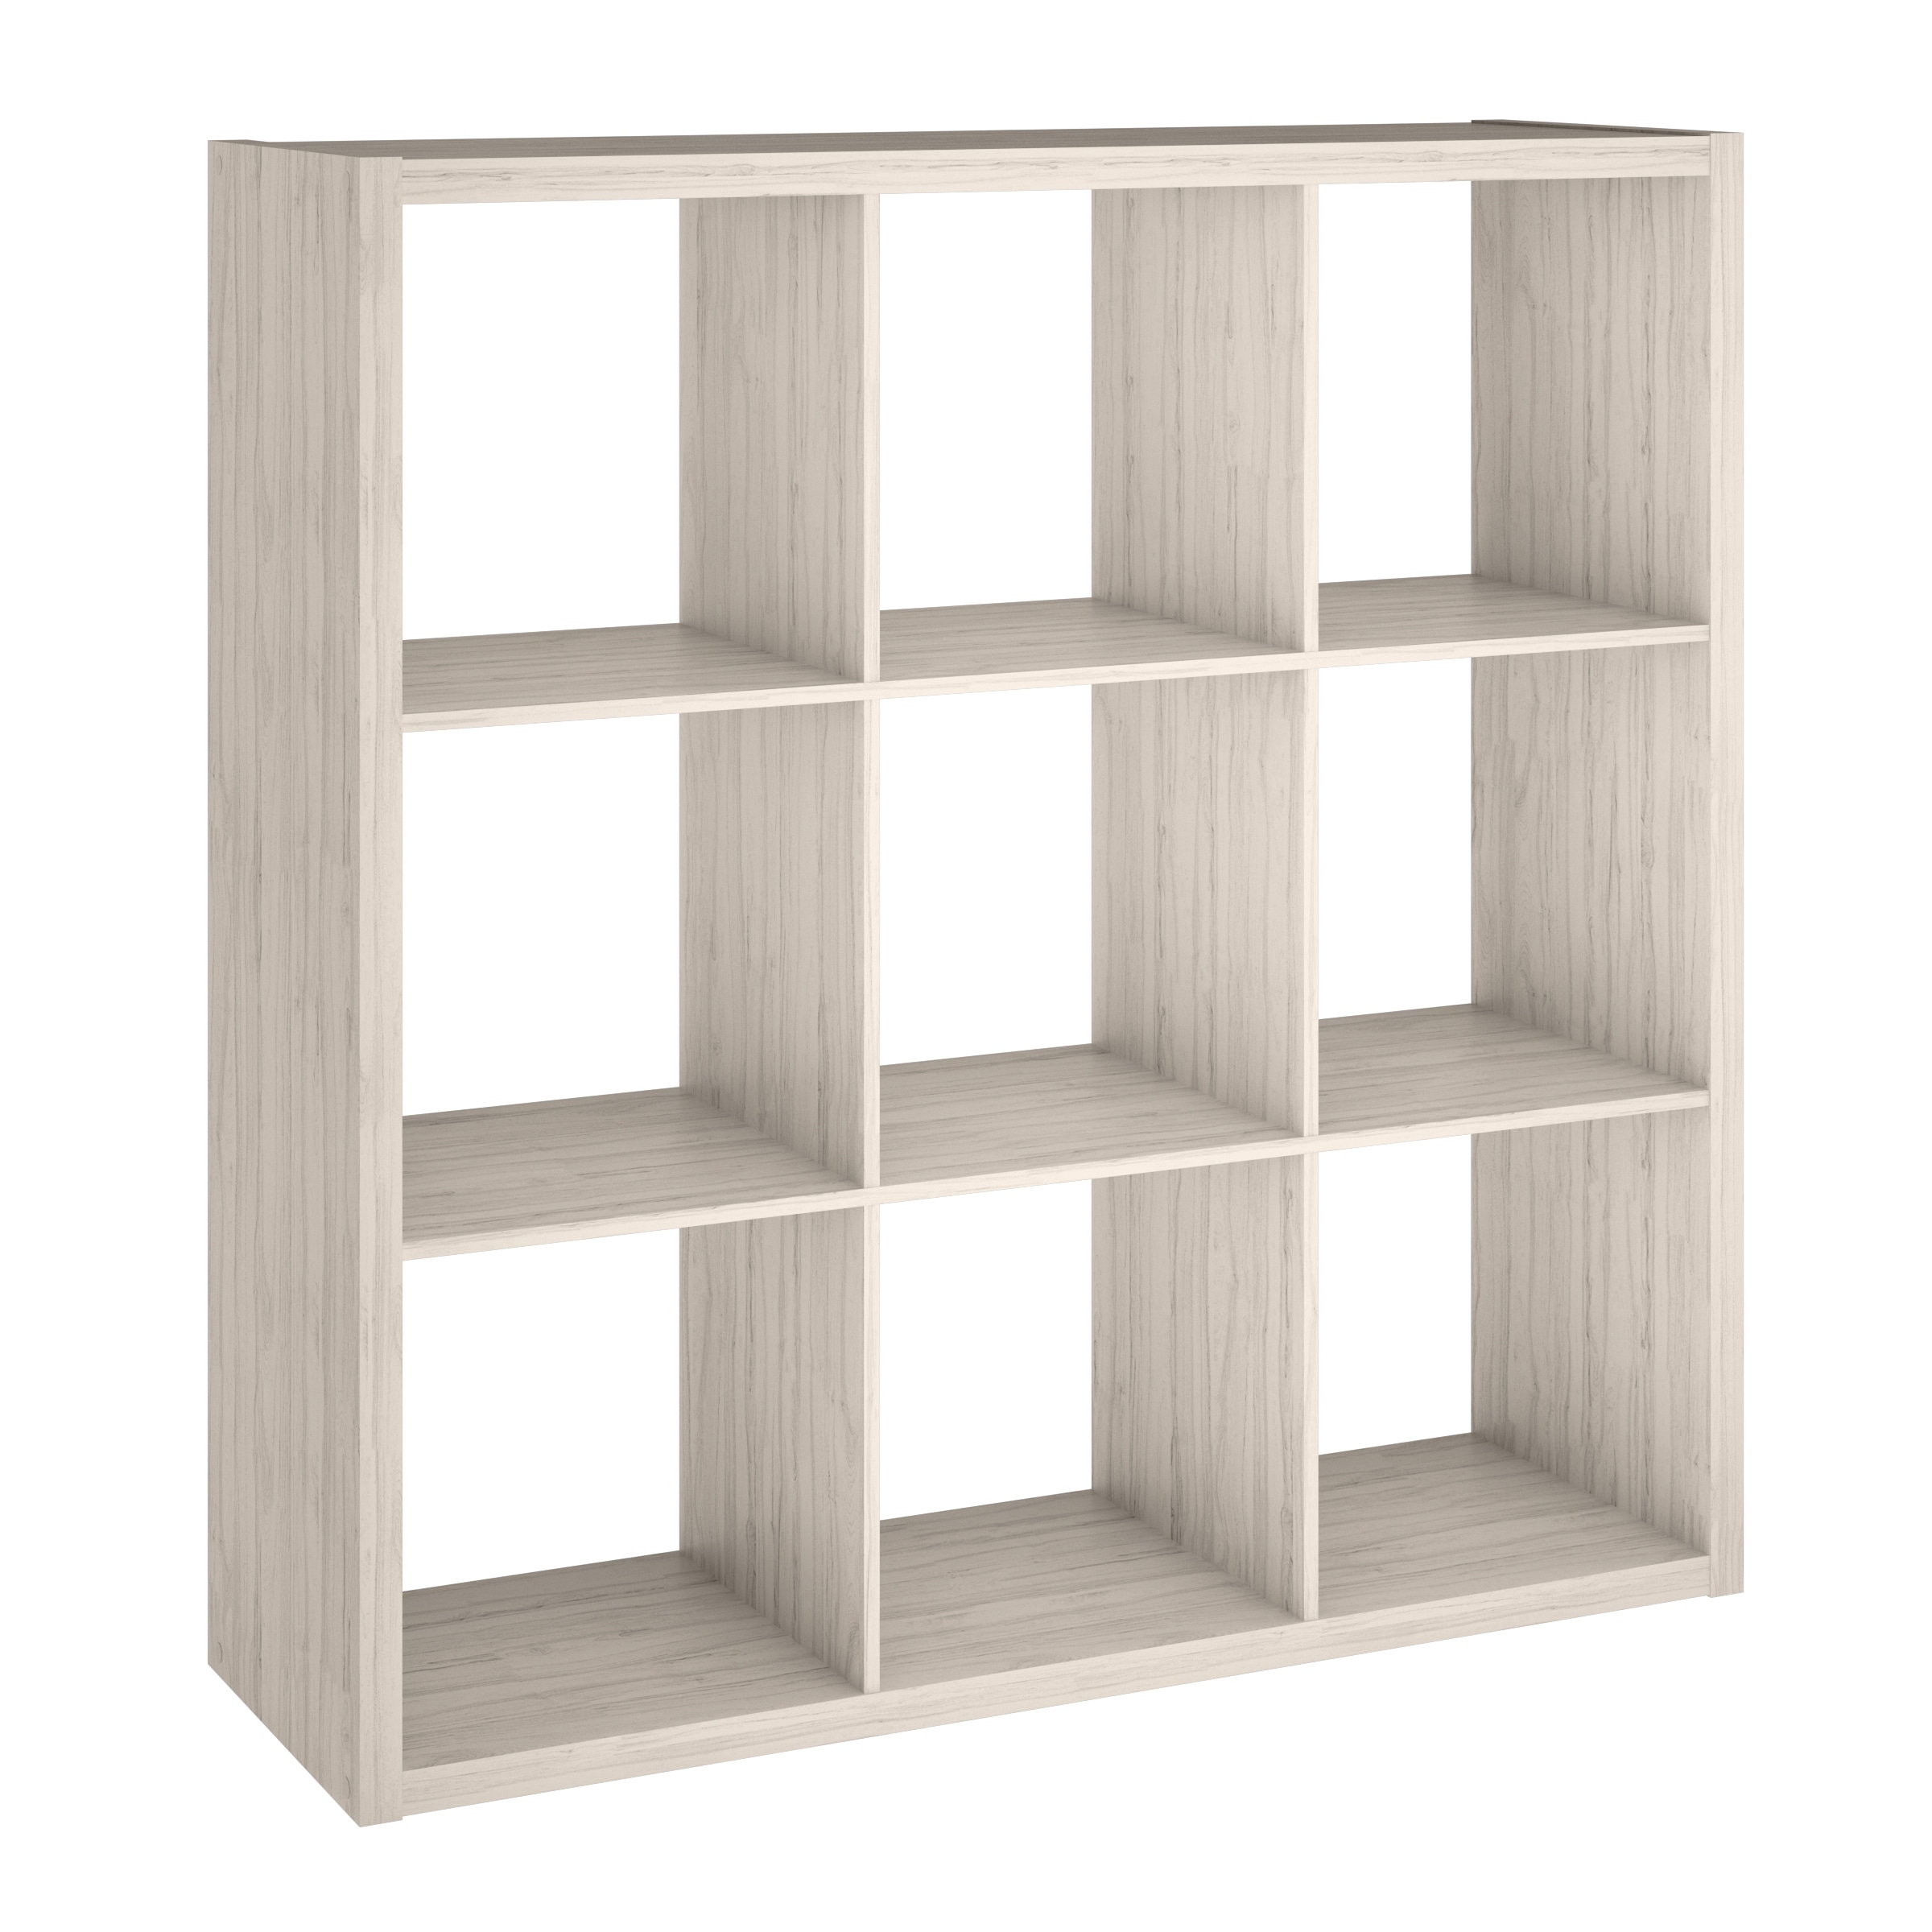 D 9-Cube Wood W x 14 in H x 24 in ClosetMaid Storage Organizer 20 in 